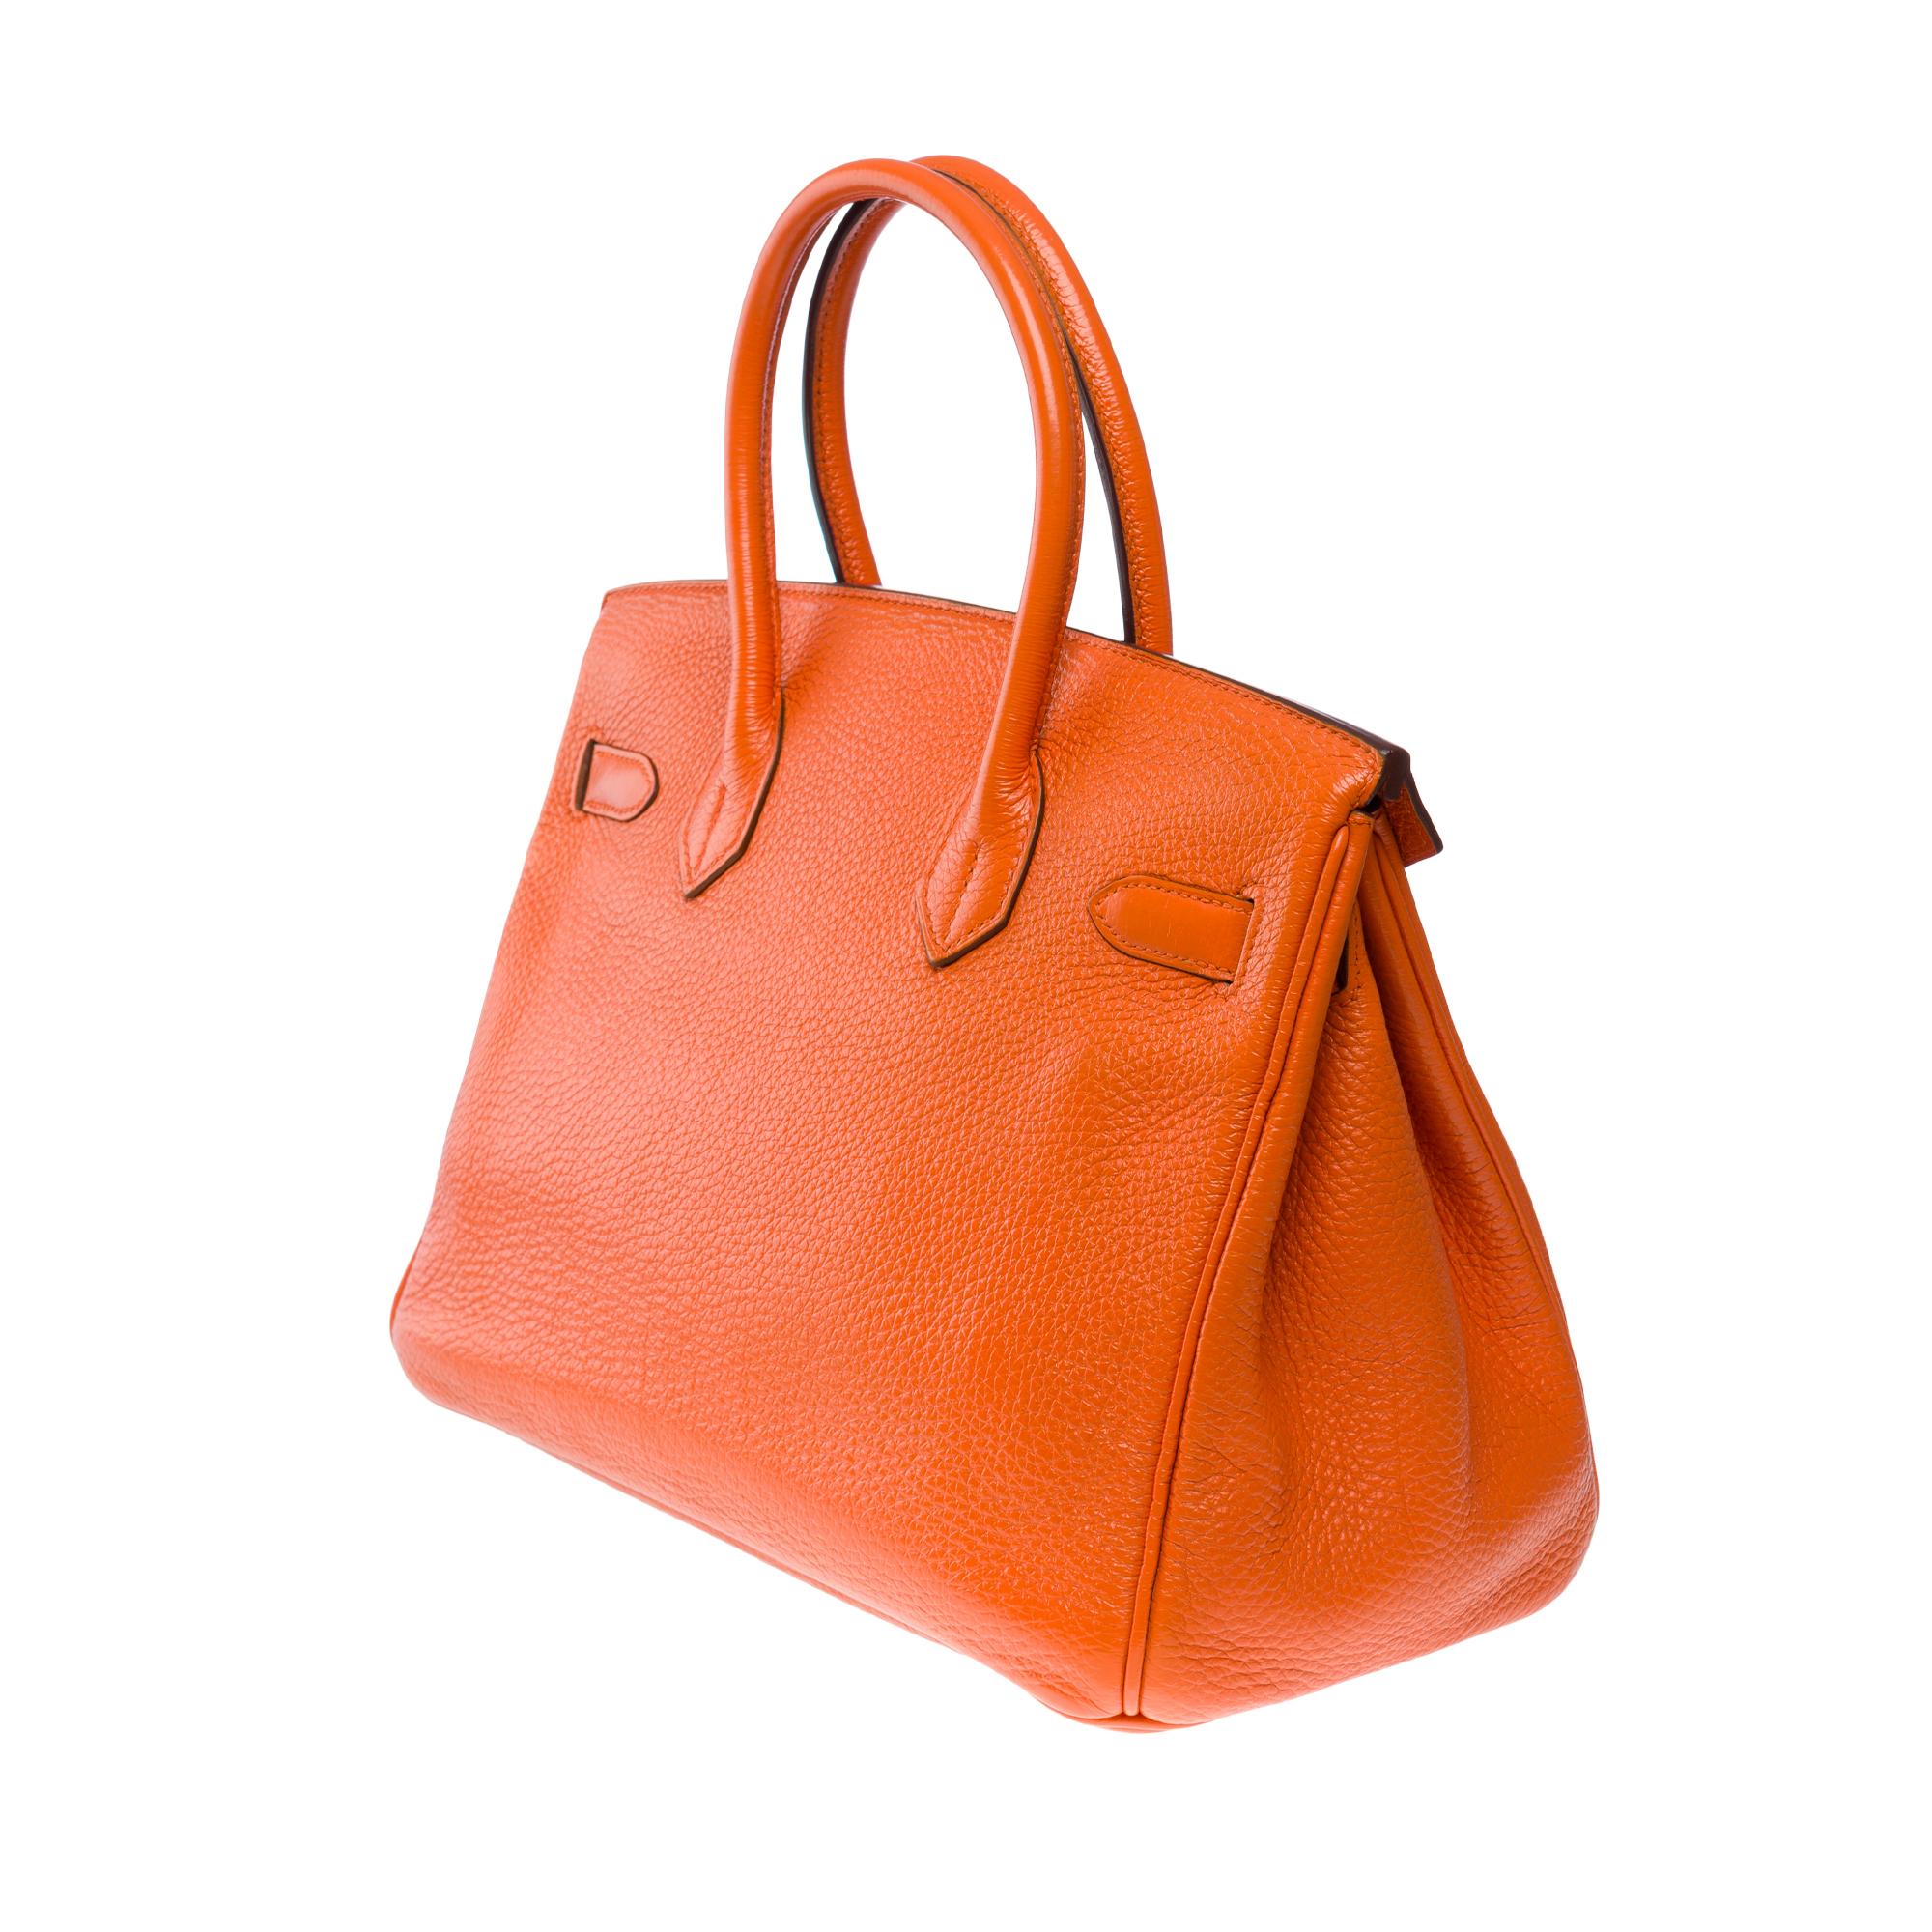 Amazing & Bright Hermès Birkin 30 handbag in Orange H Togo leather, SHW For Sale 1